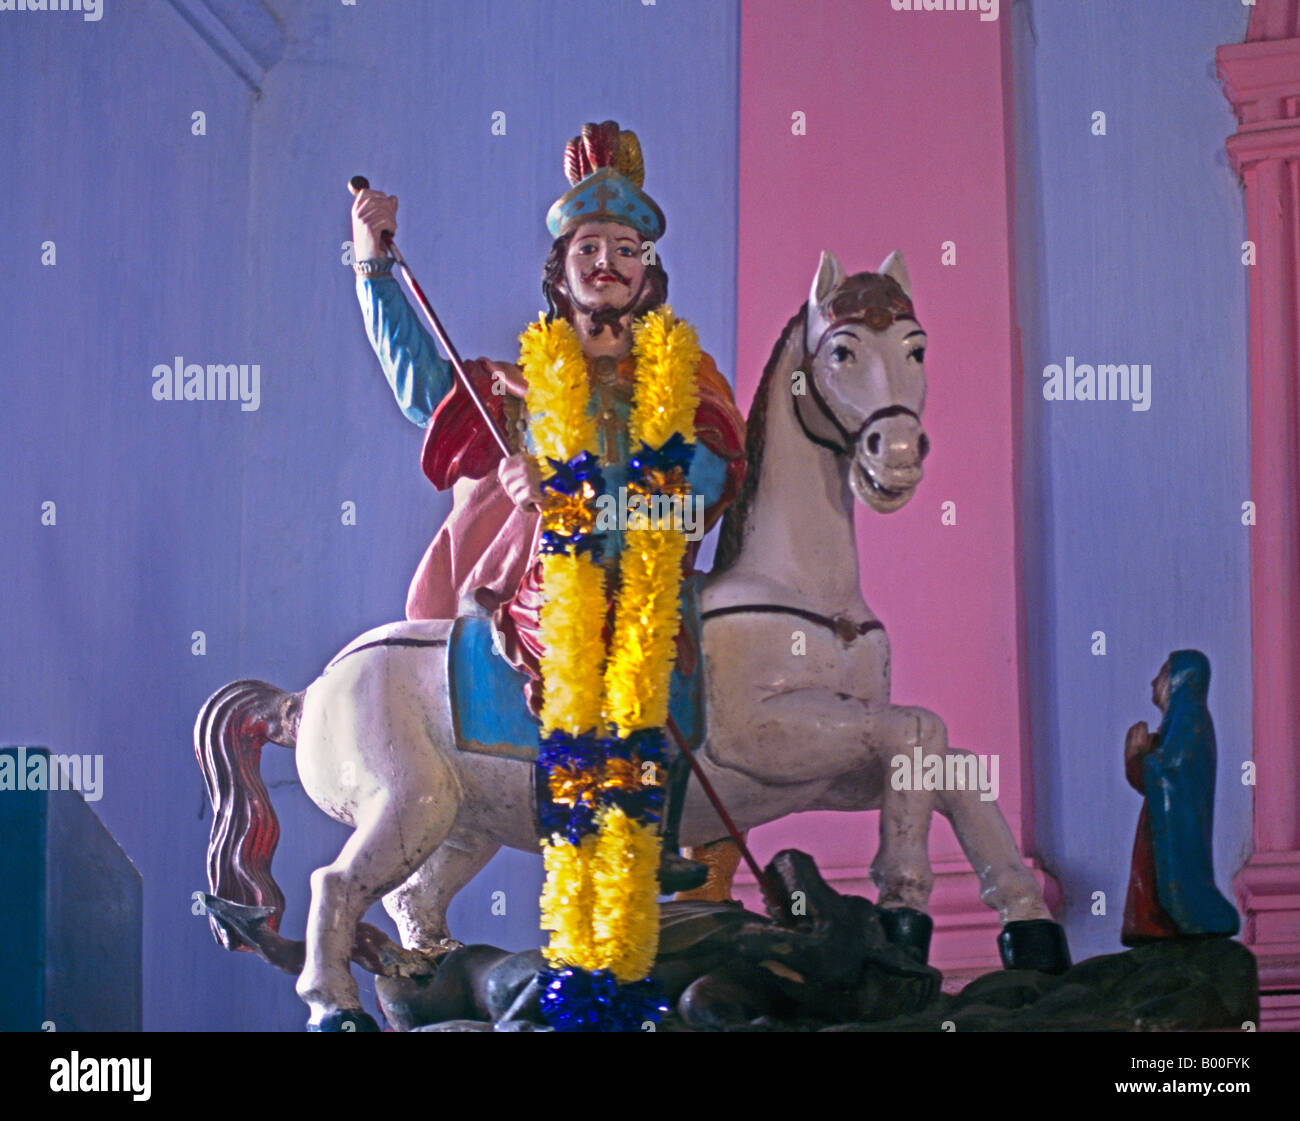 Kerala India Statue Of St George Slaying The Dragon Stock Photo